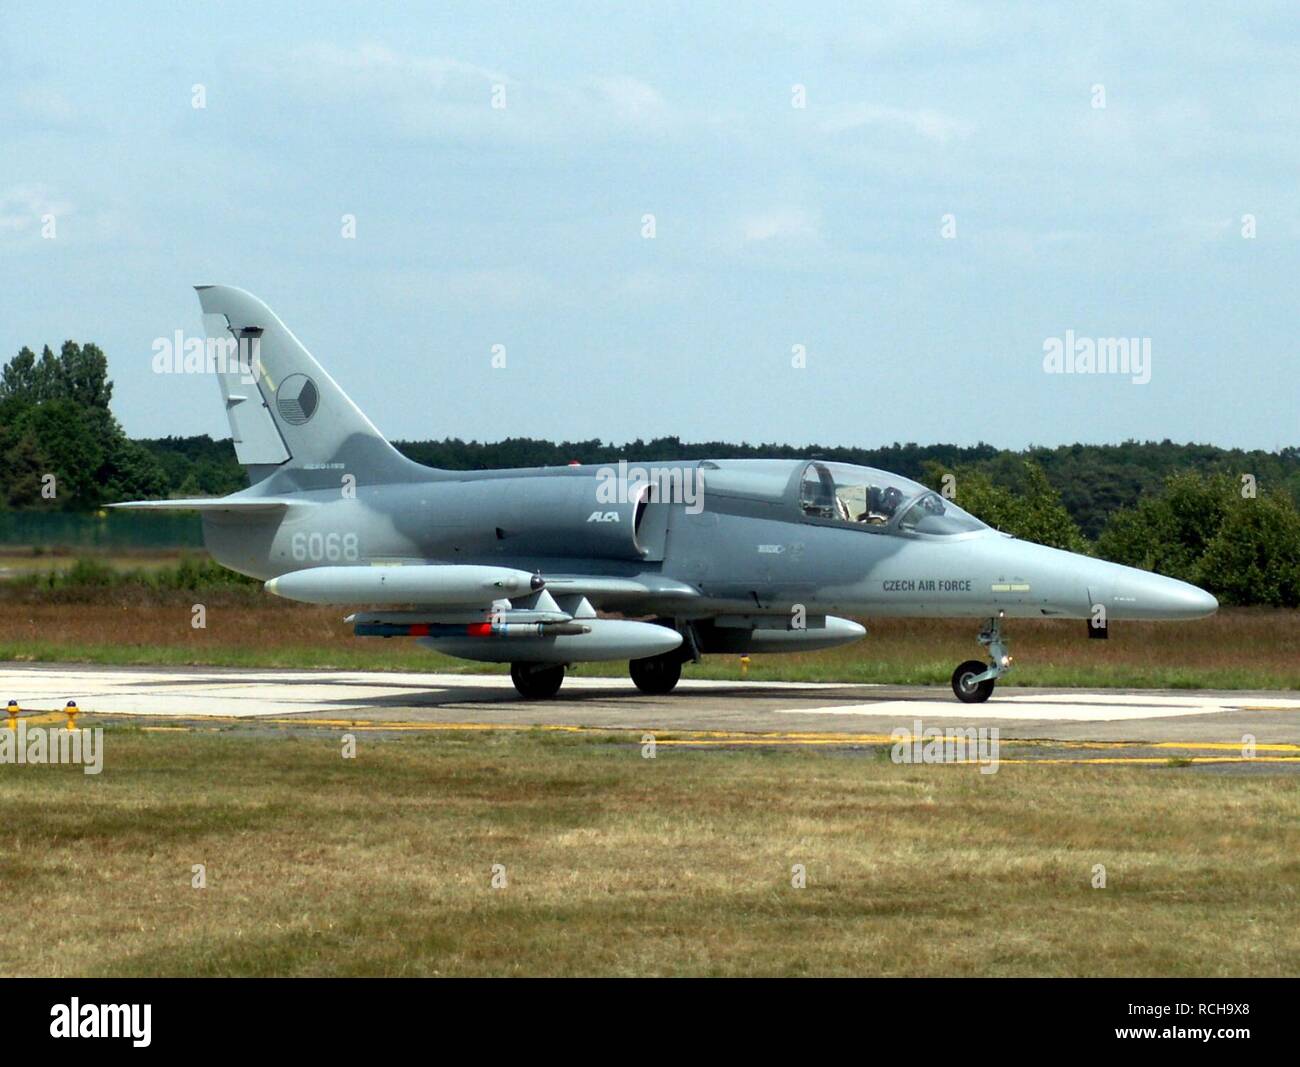 Albatros, Czech Air Force 6068 at Kleine Brogel Air Base, Belgium 2005. Stock Photo